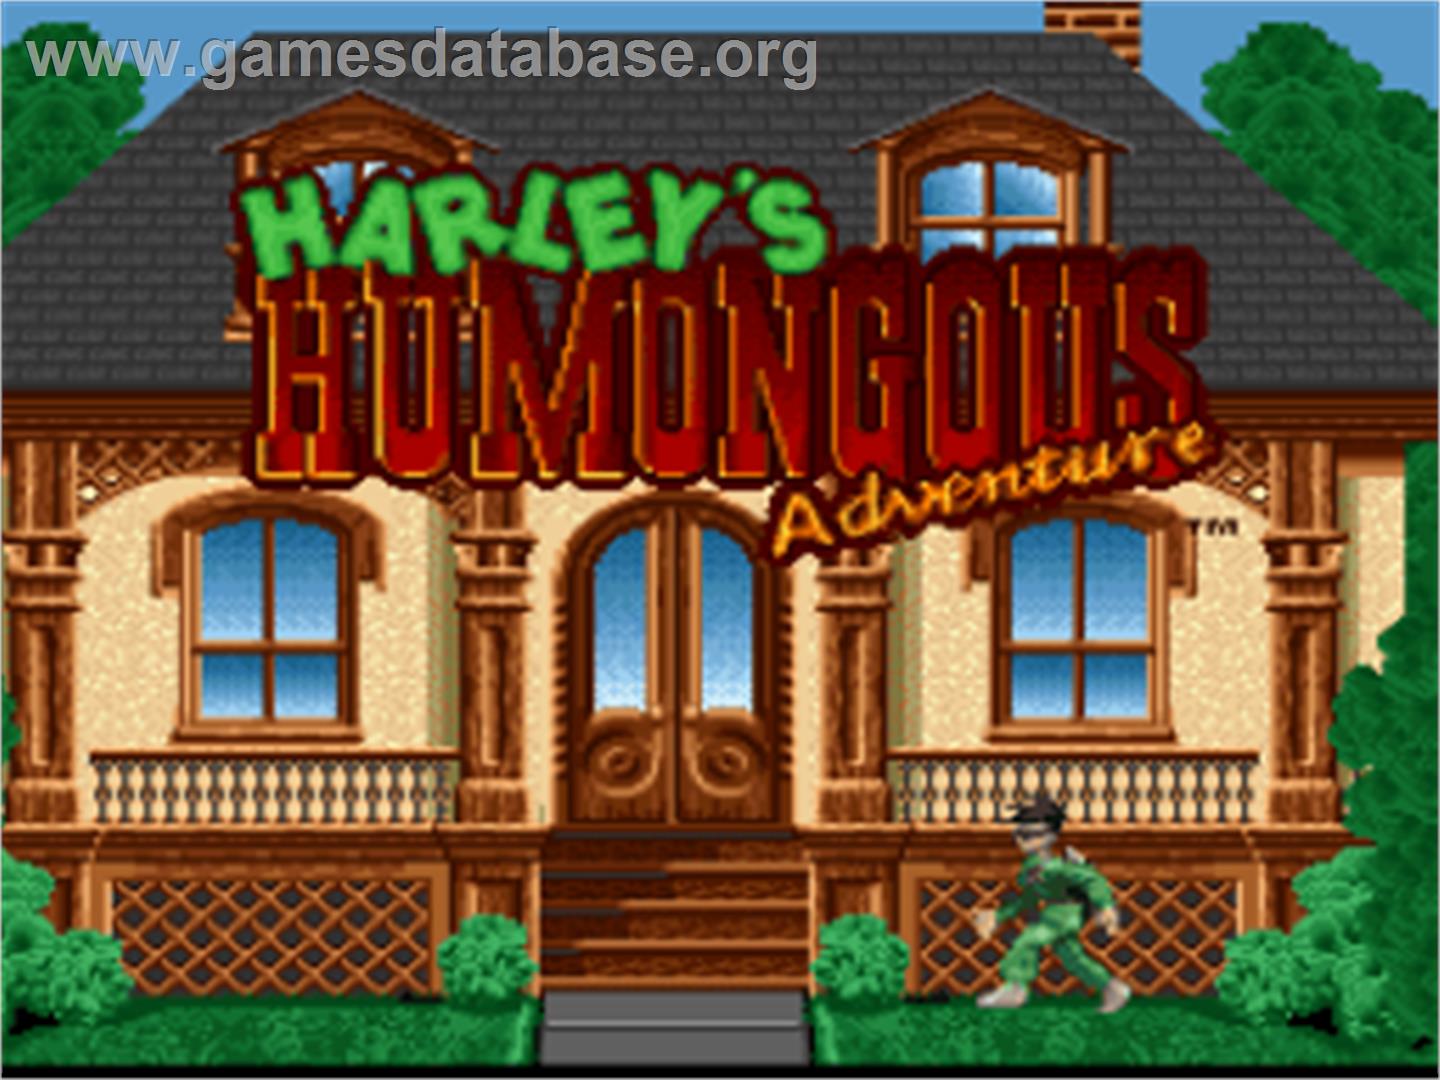 Harley's Humongous Adventure - Nintendo SNES - Artwork - Title Screen